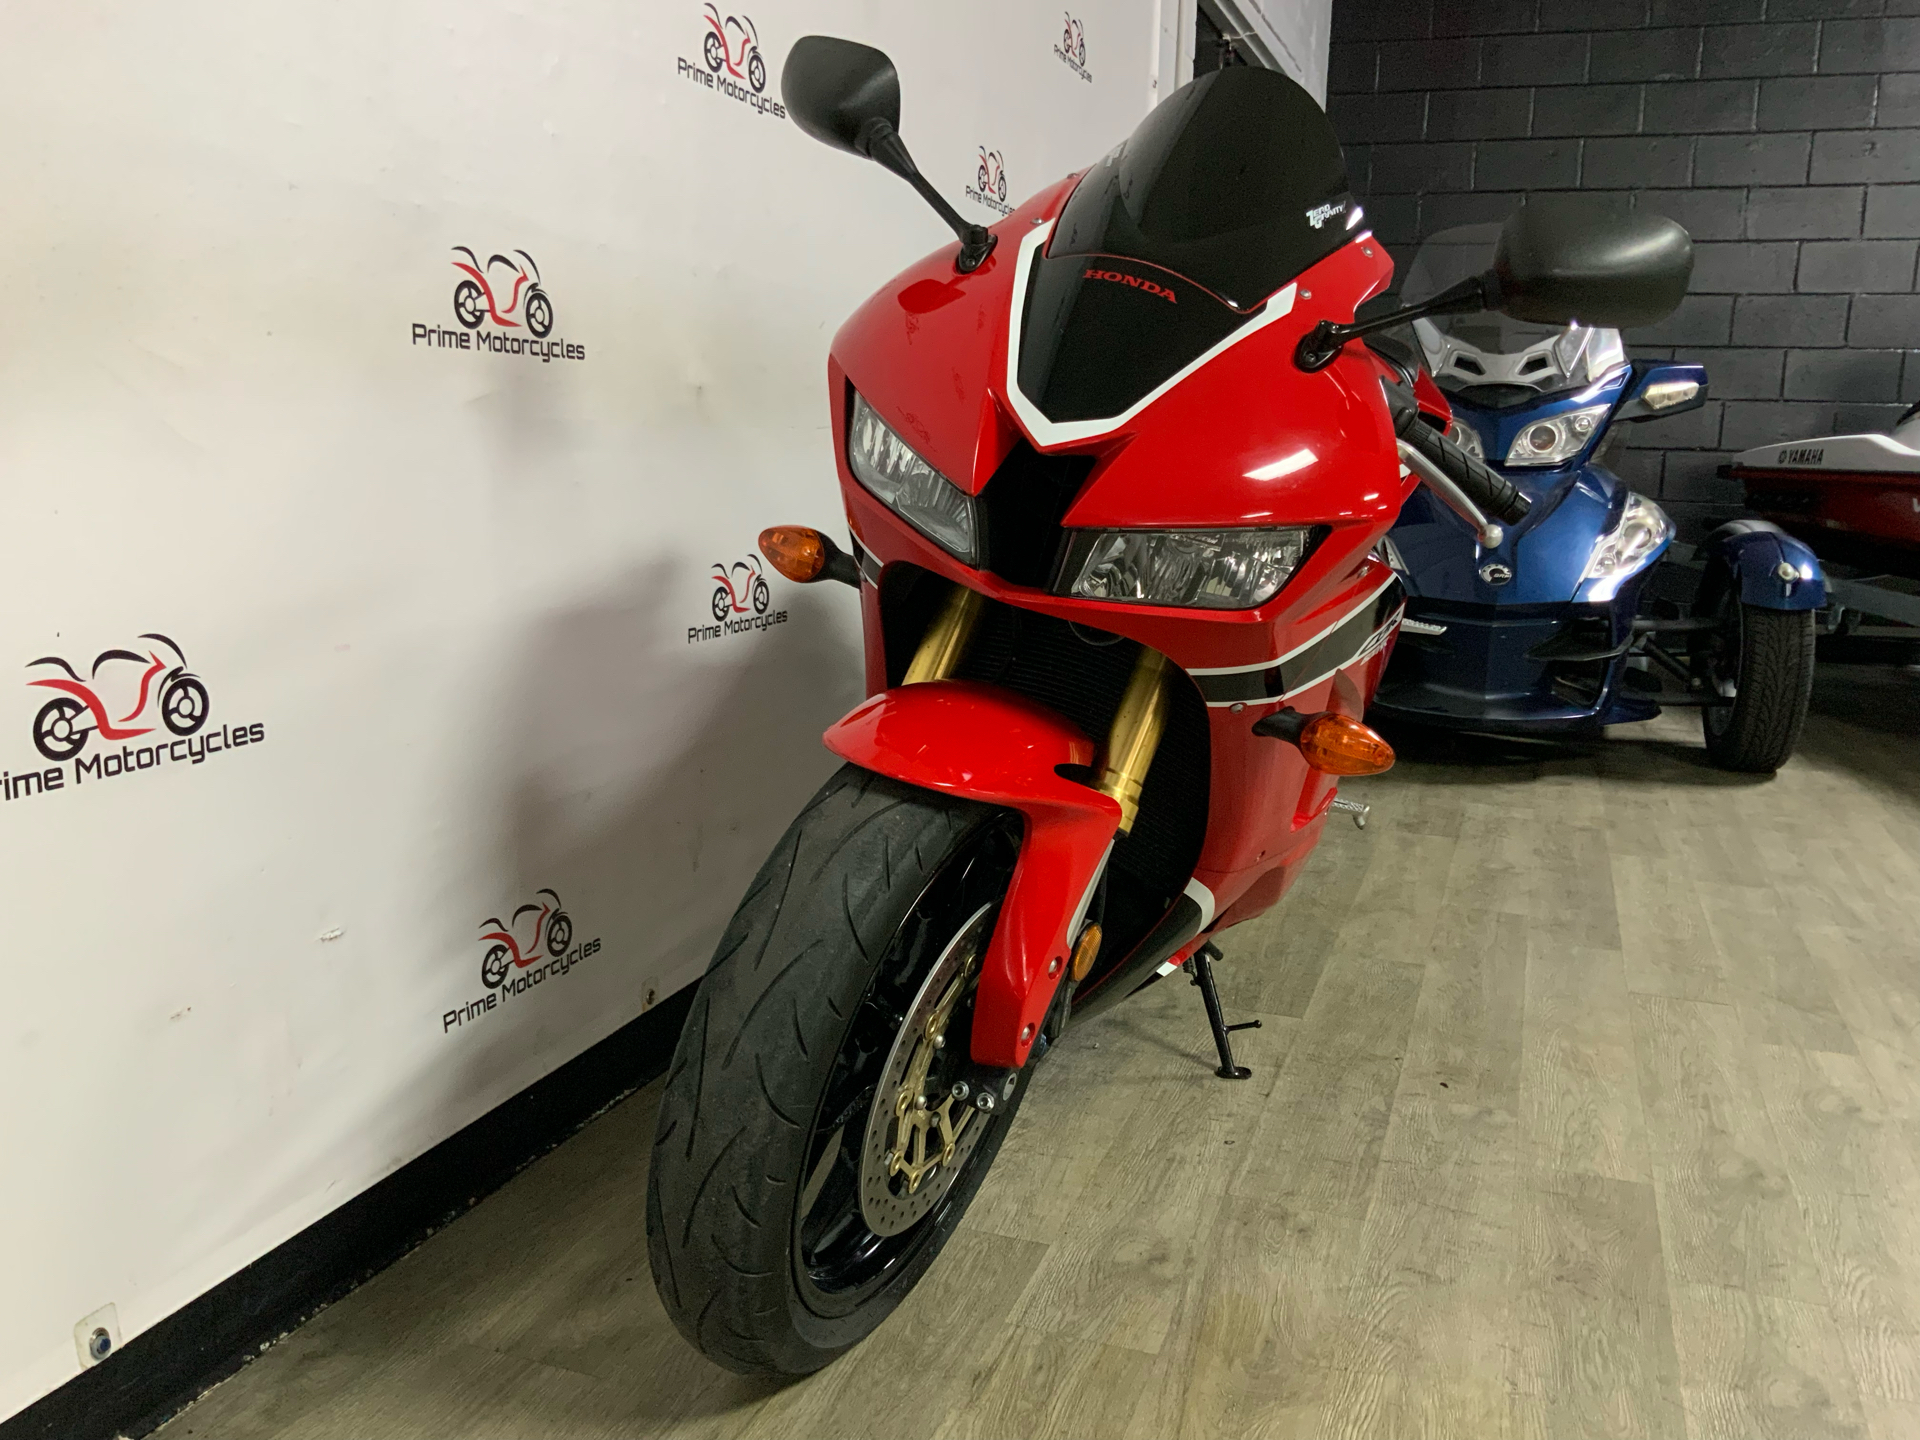 2018 Honda CBR600RR in Sanford, Florida - Photo 3